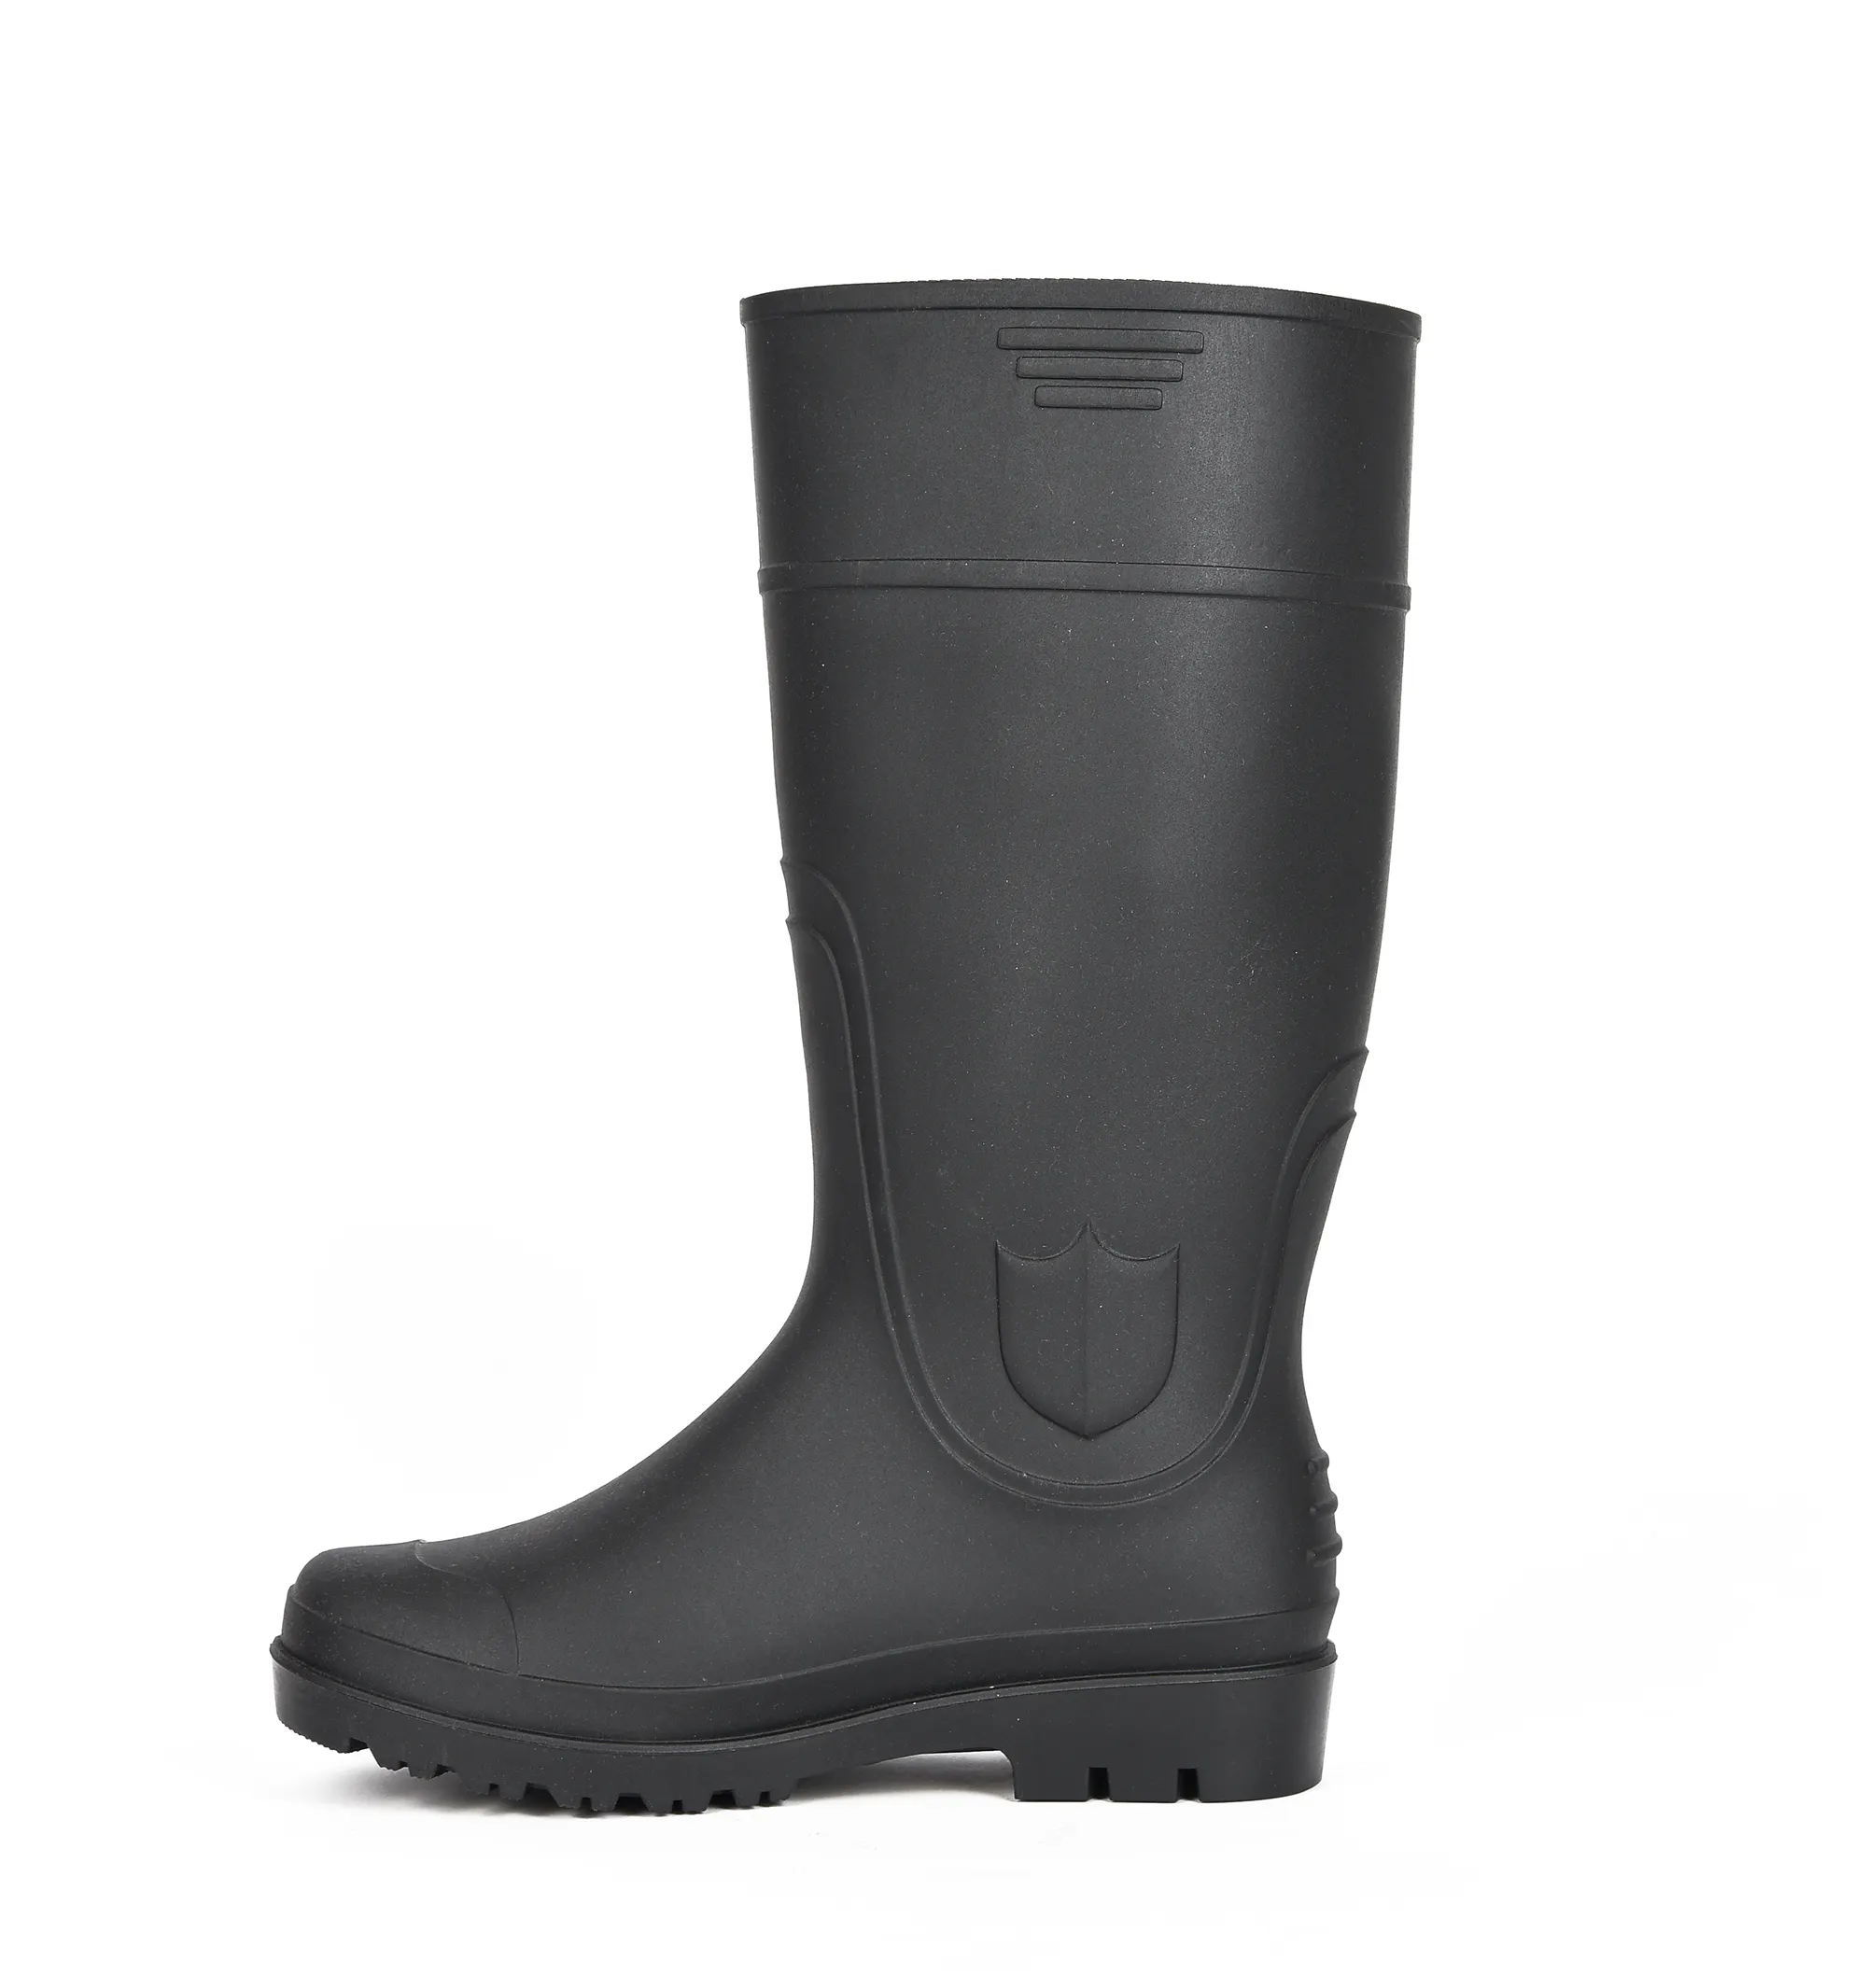 PVC non-Slip waterproof fishing lightweight rain boots men for adults outdoor work